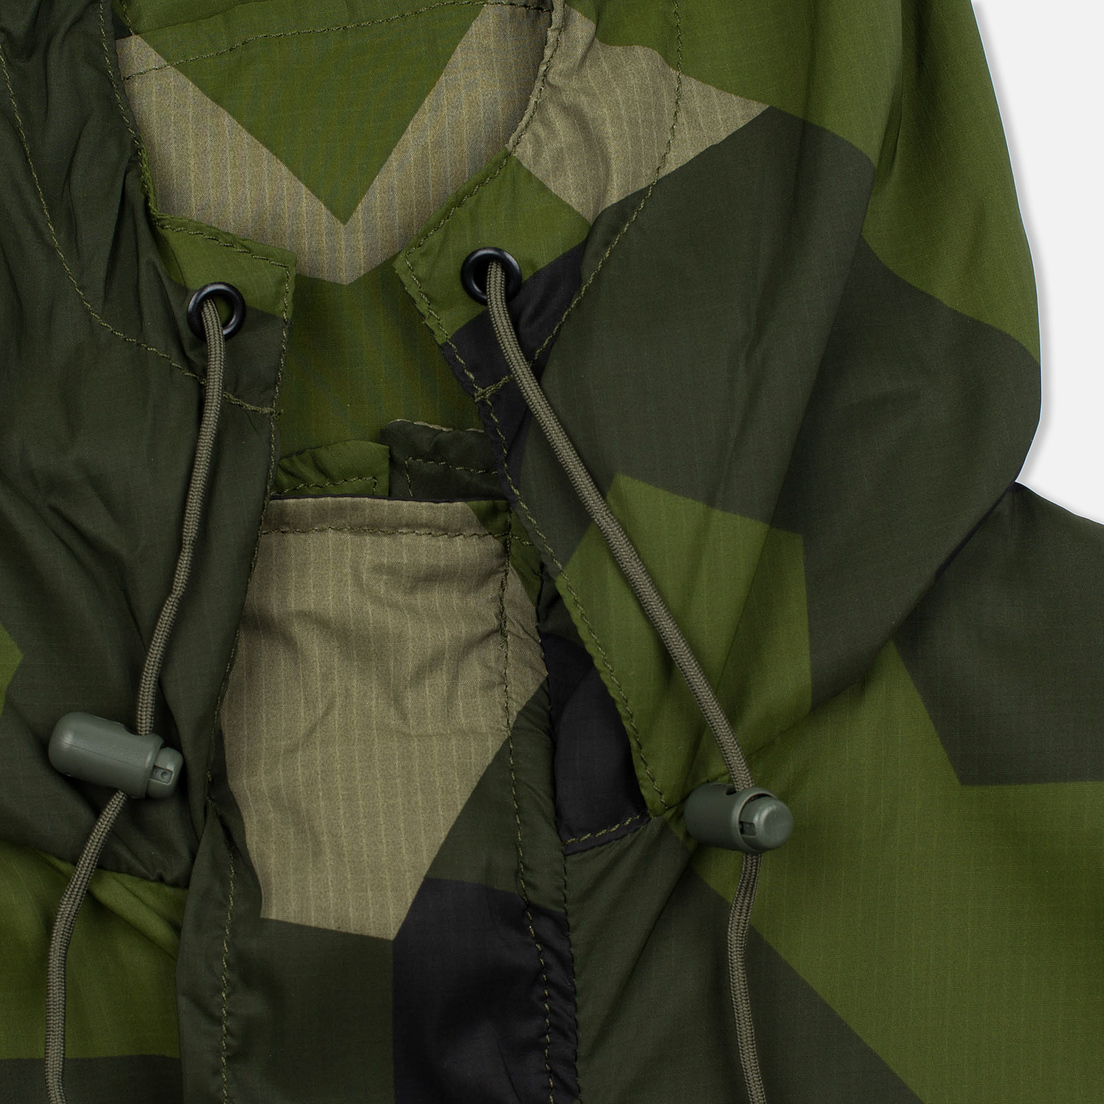 ArkAir Мужская куртка парка B520AA Fully Lined